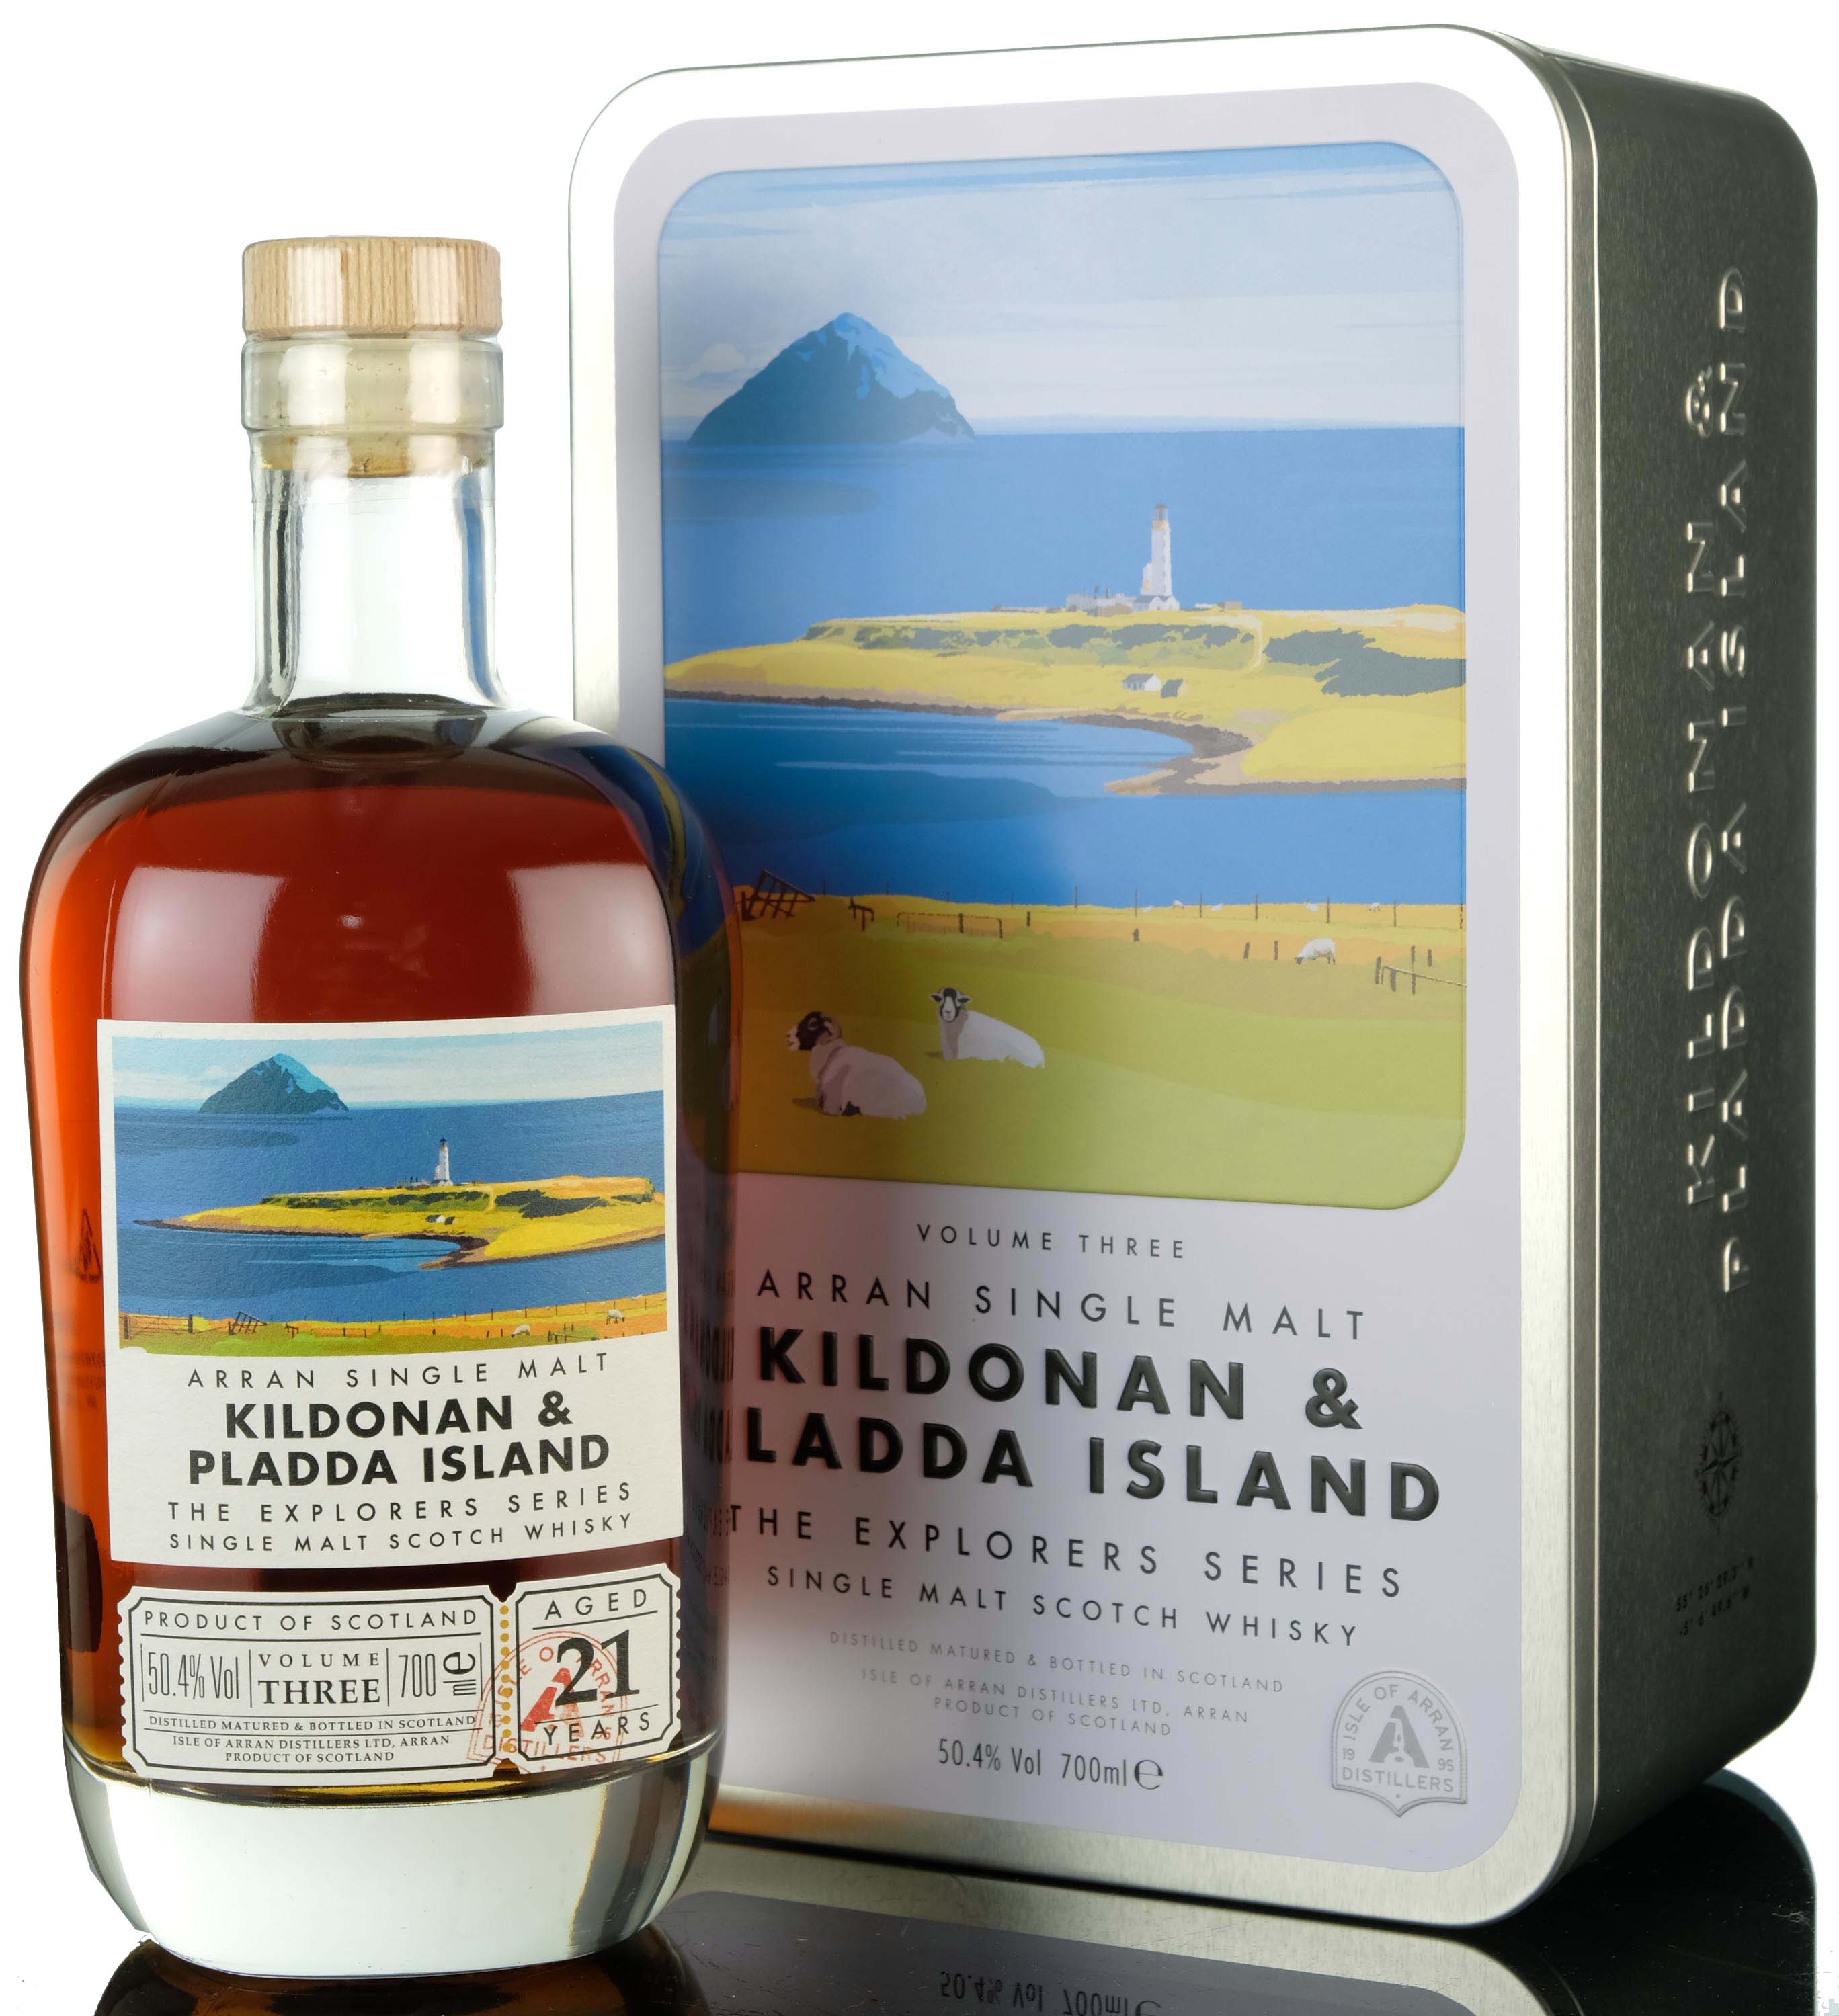 Arran 21 Year Old - Kildonan & Pladda Island Explorers Series - Volume Three